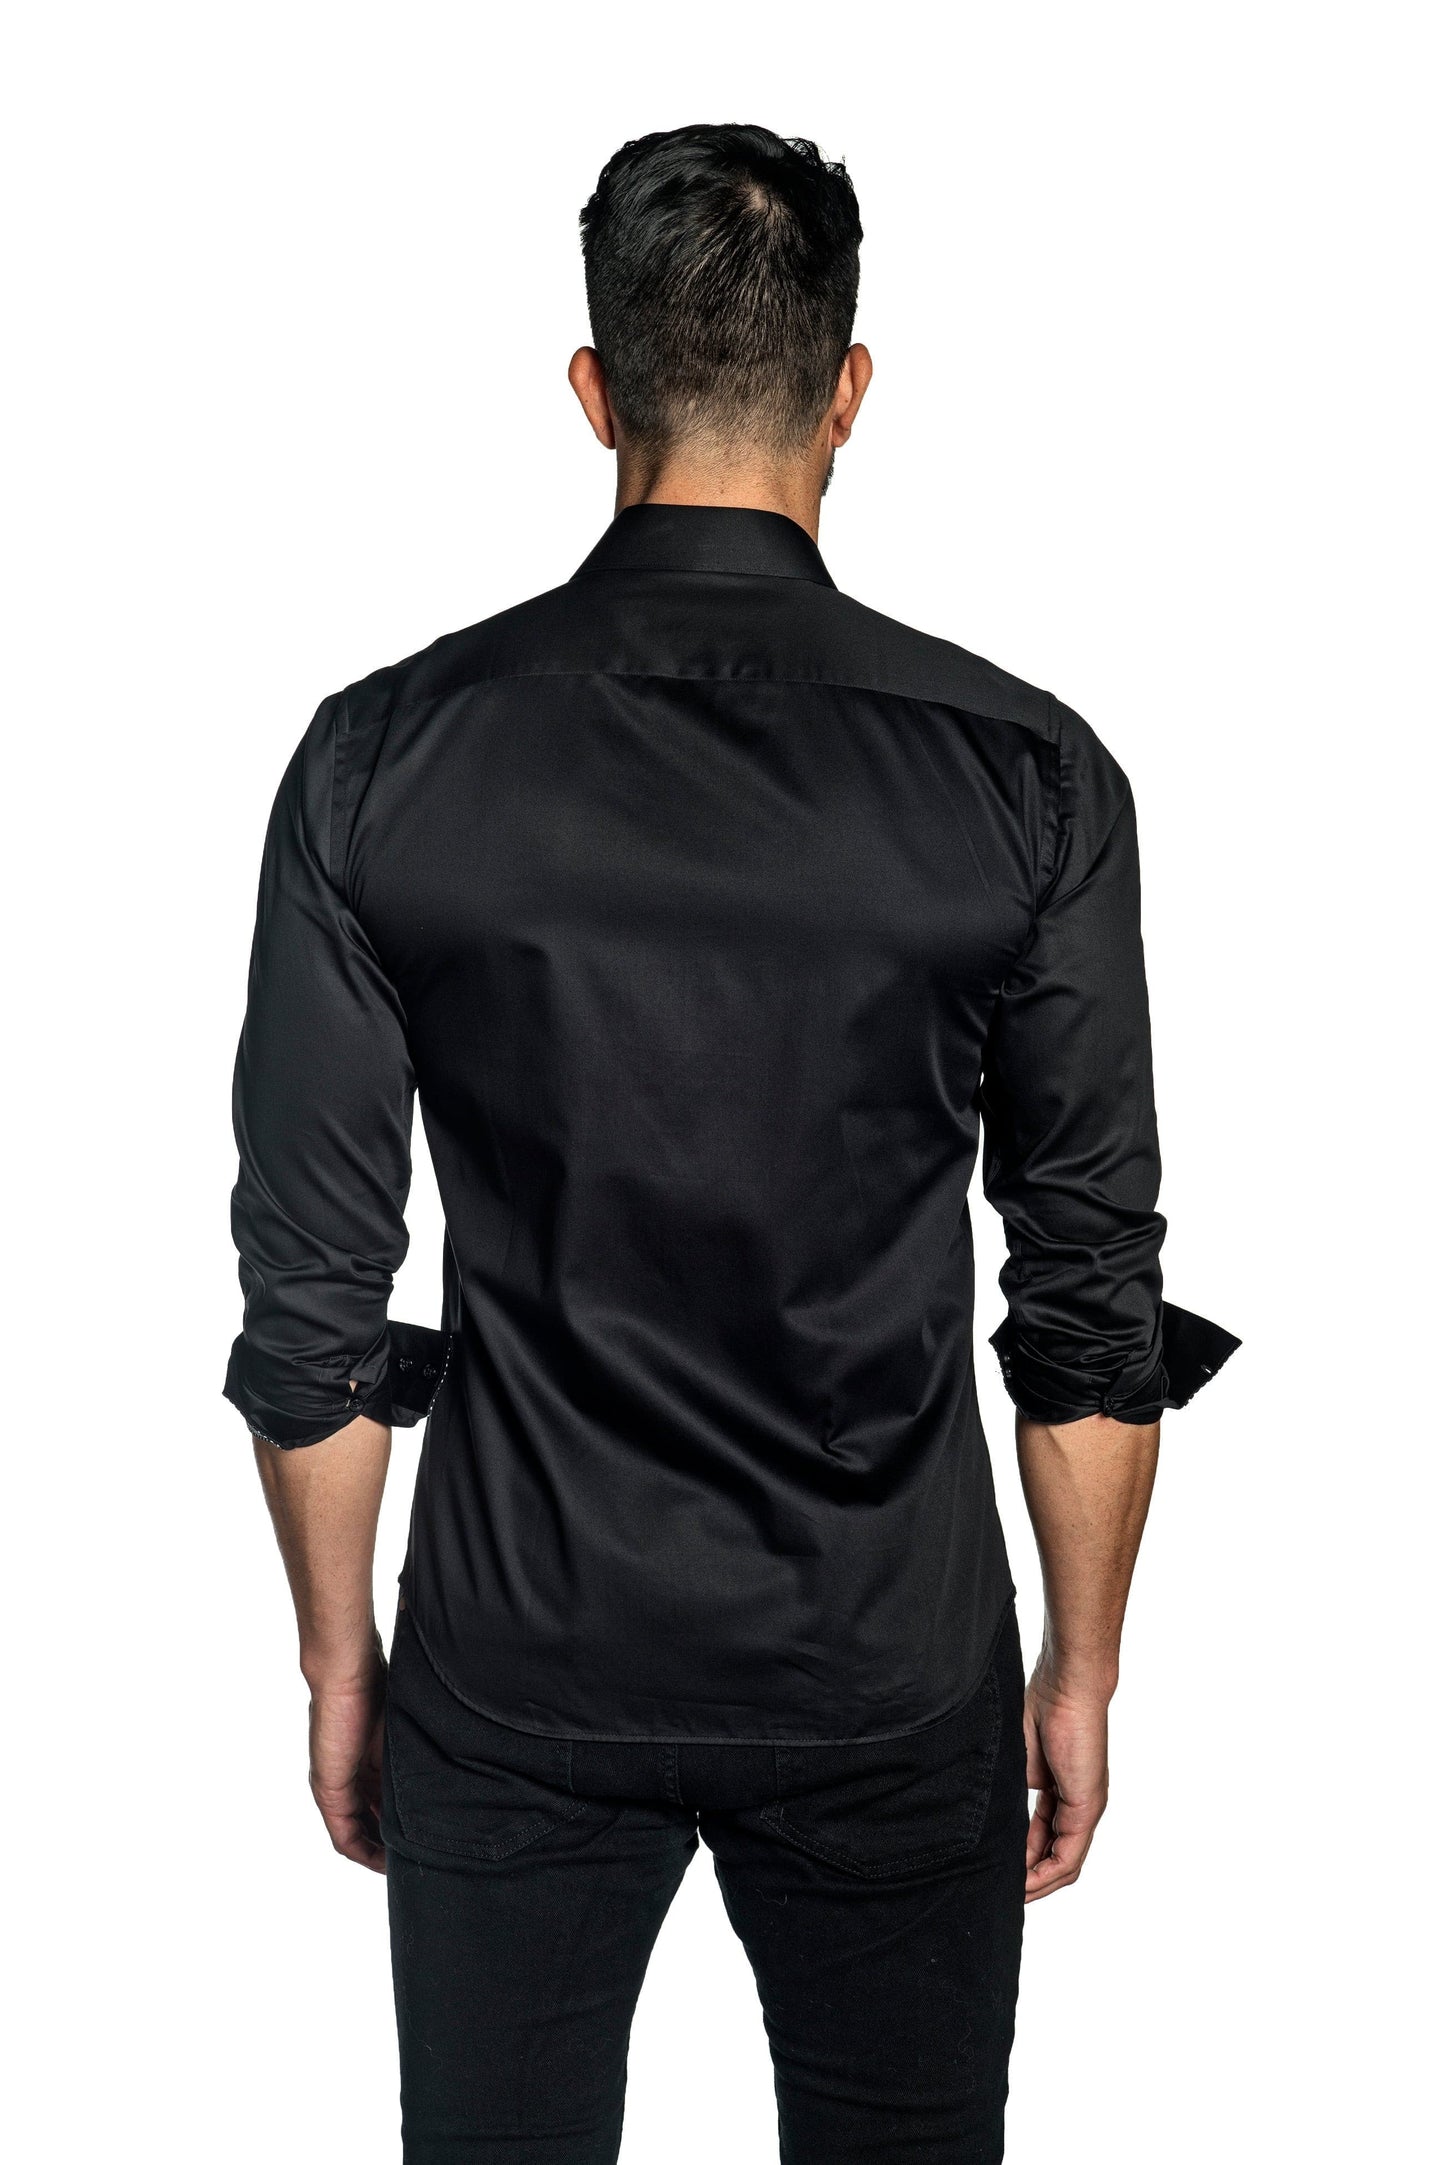 Black Long Sleeve Shirt T-2072 - Back - Jared Lang